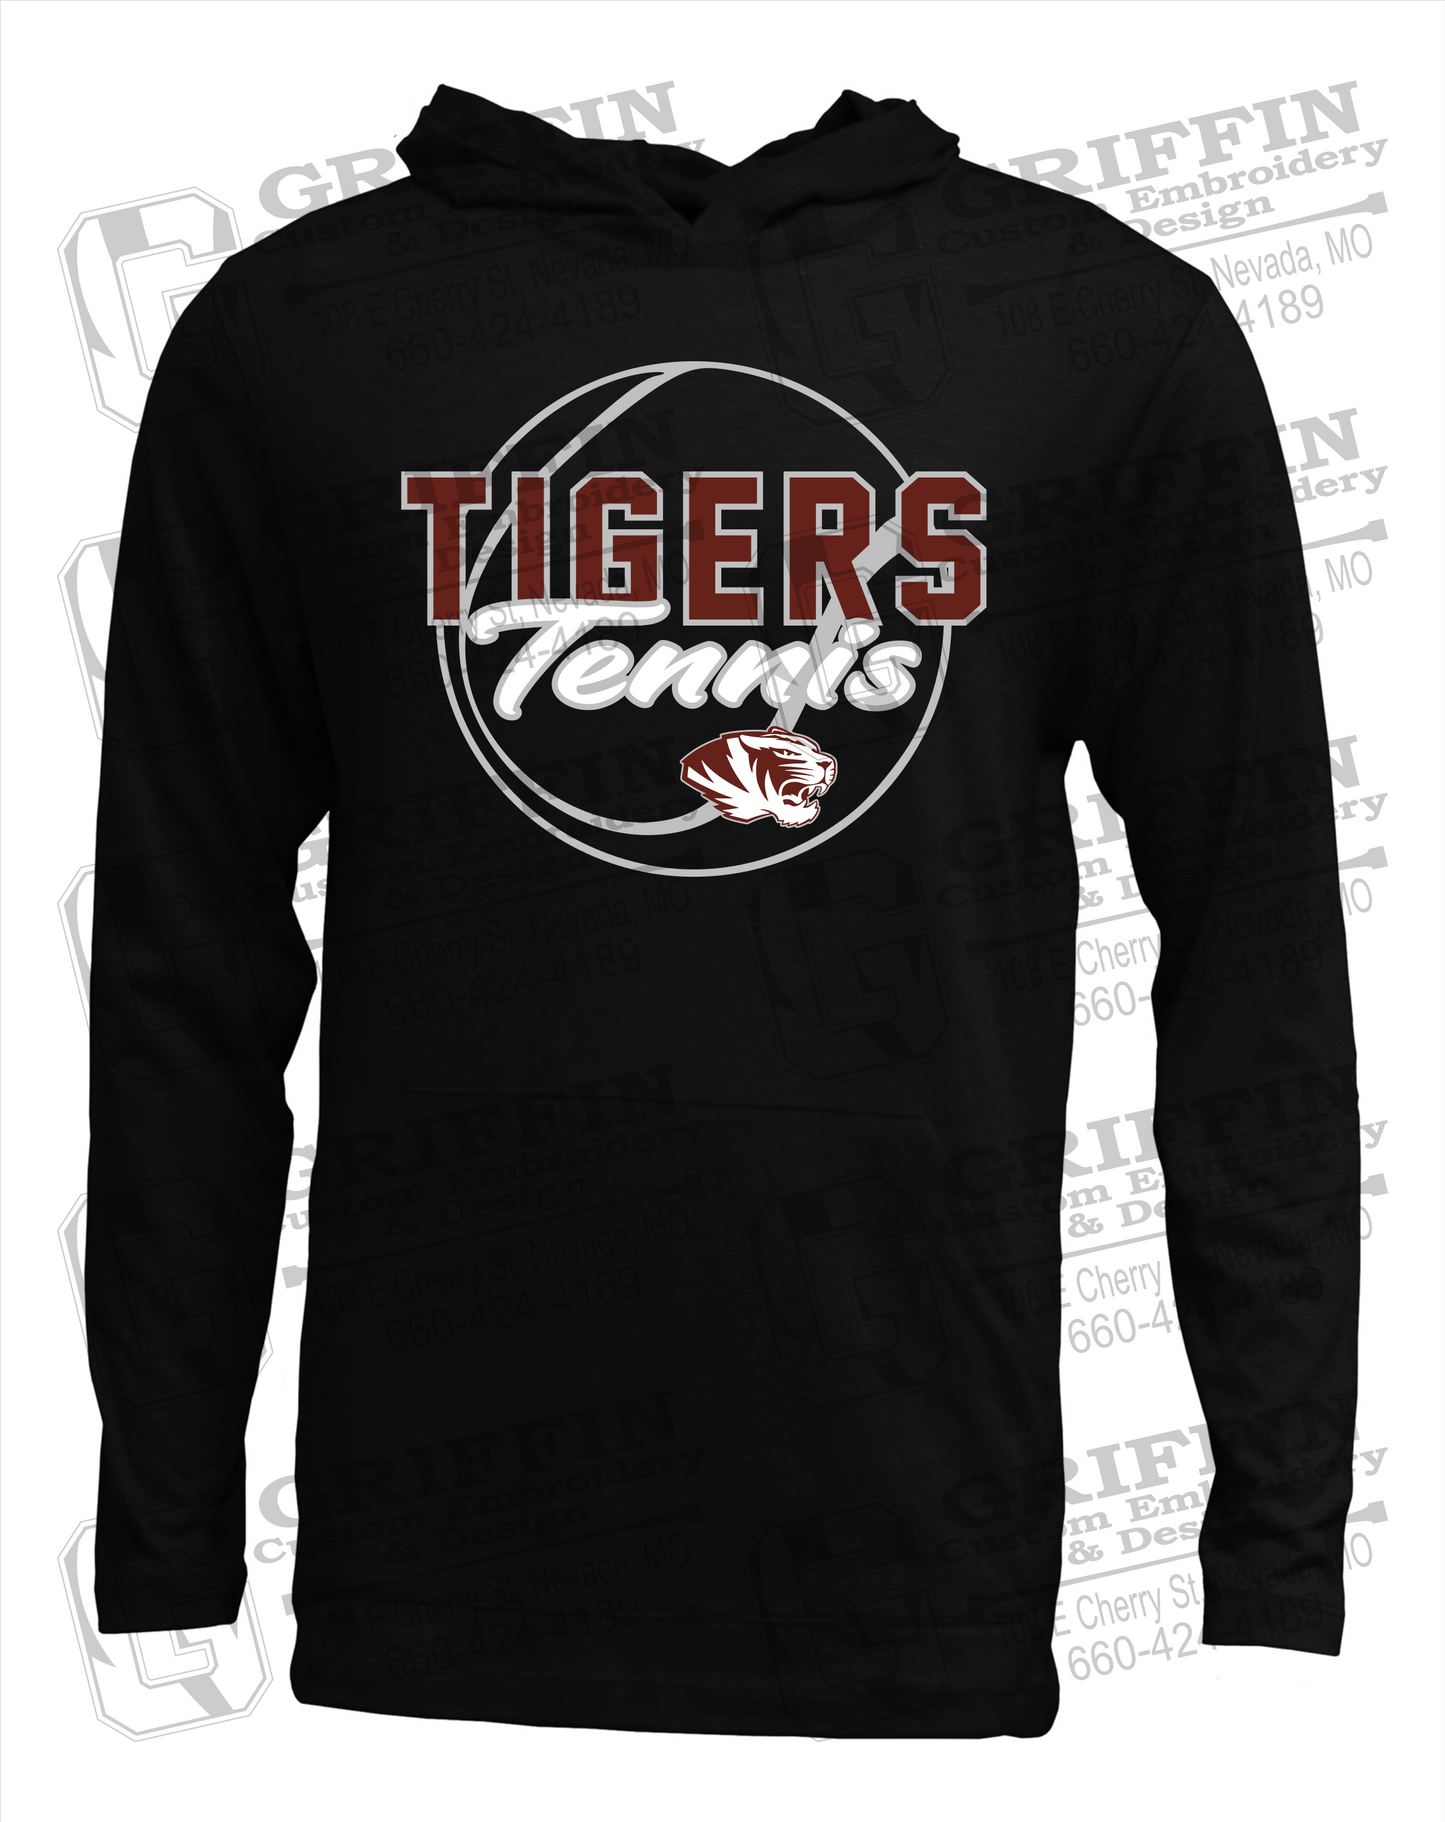 Soft-Tek T-Shirt Hoodie - Tennis - Nevada Tigers 23-X